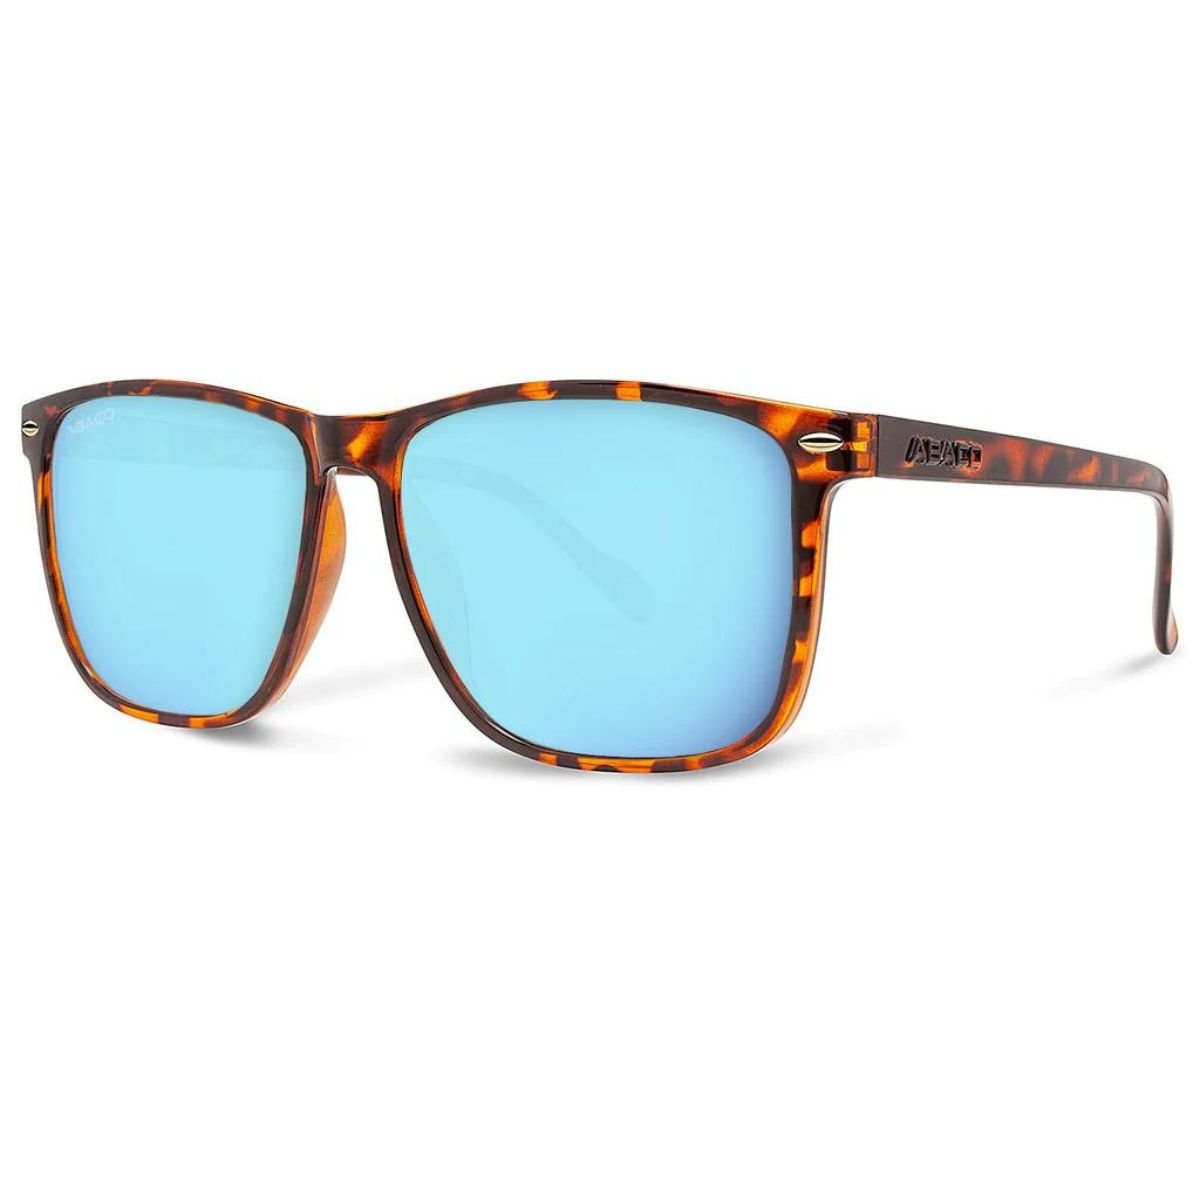 Abaco Jesse Sunglasses in Tortoise/Caribbean Blue - BoardCo